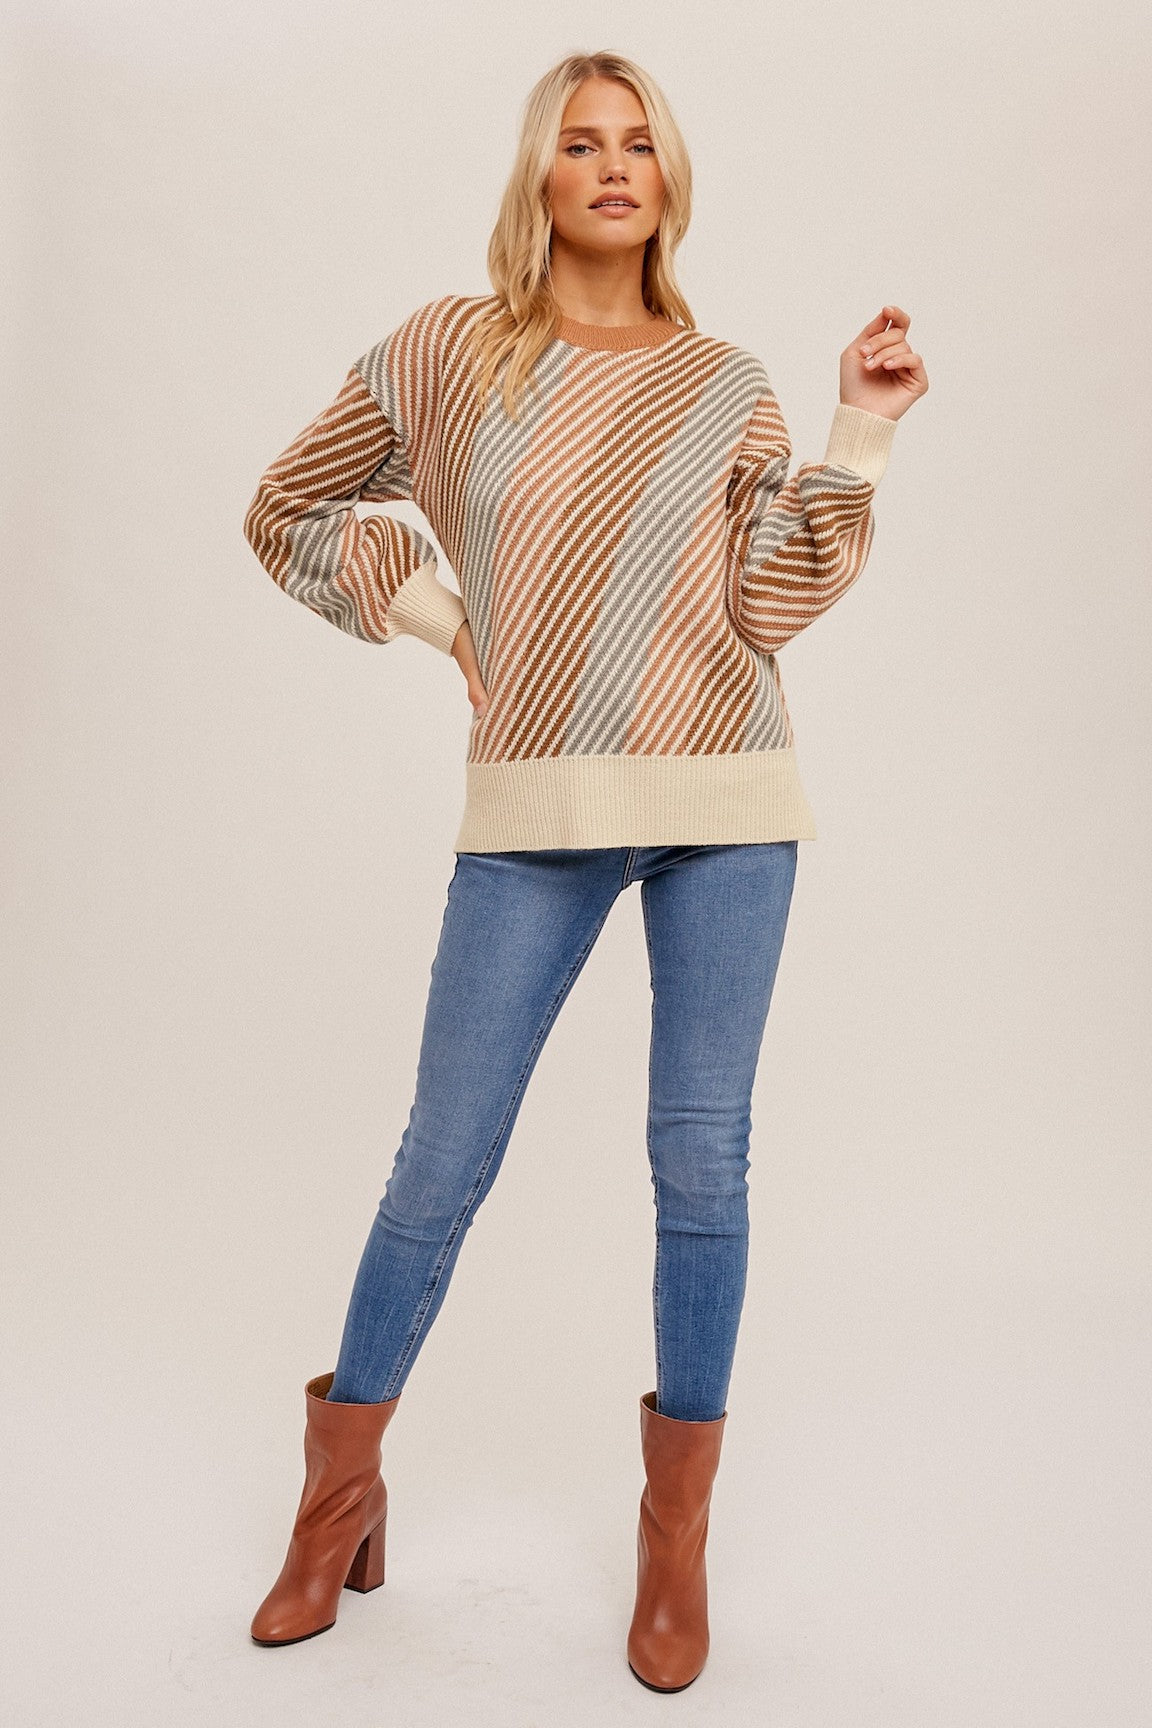 Gemma Multi Colored Stripe Sweater